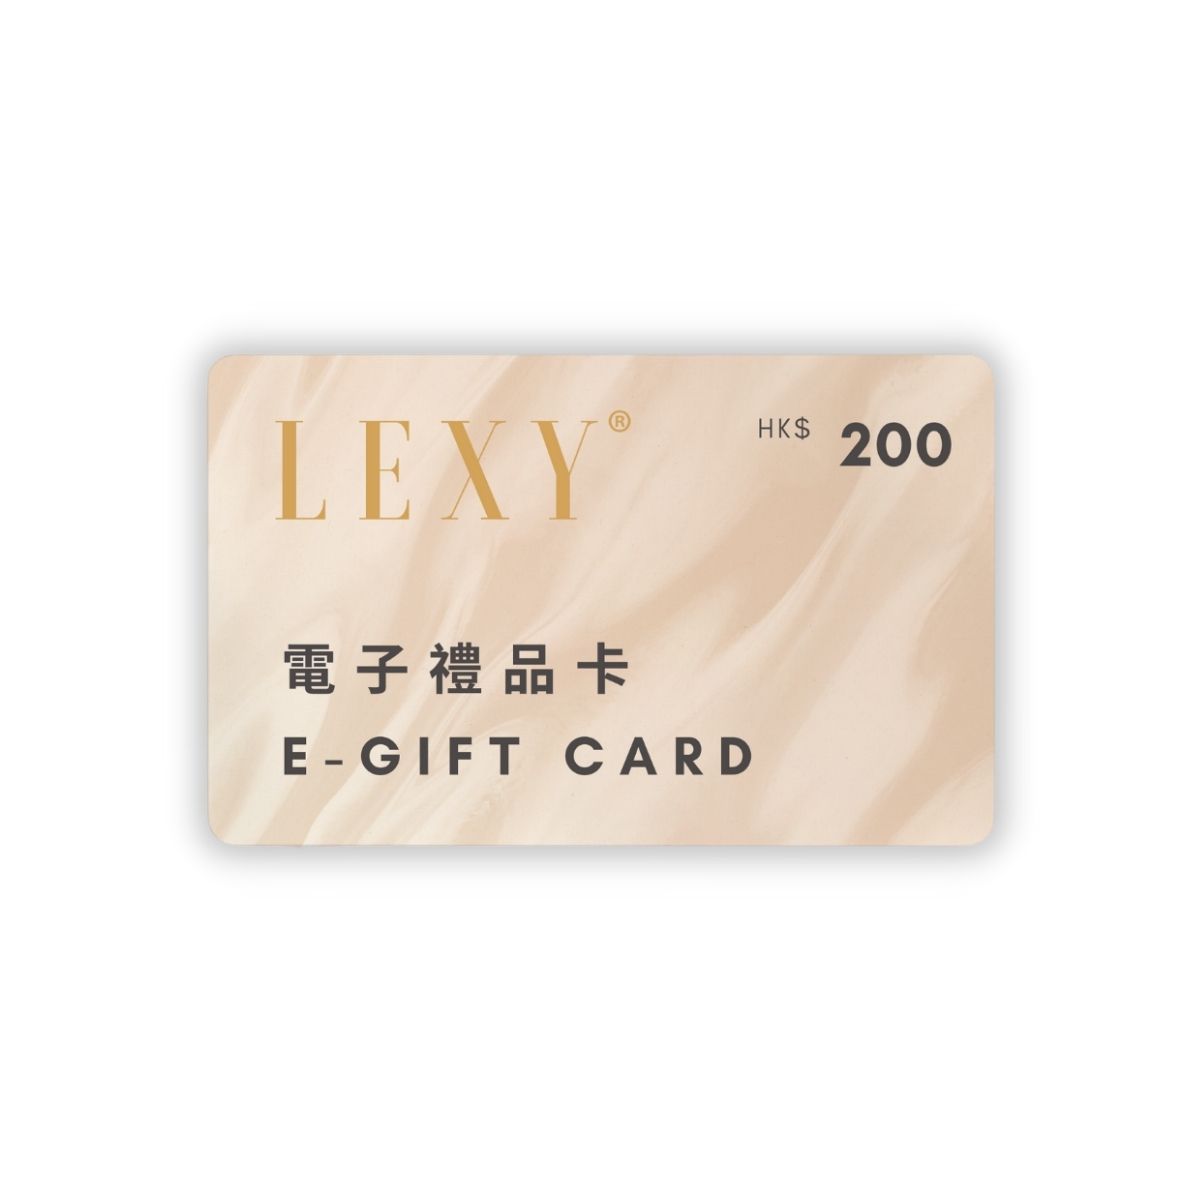 LEXY ® LEXY ® e-Gift Cards 電子禮品卡 Gift Cards HK$200.00 購買